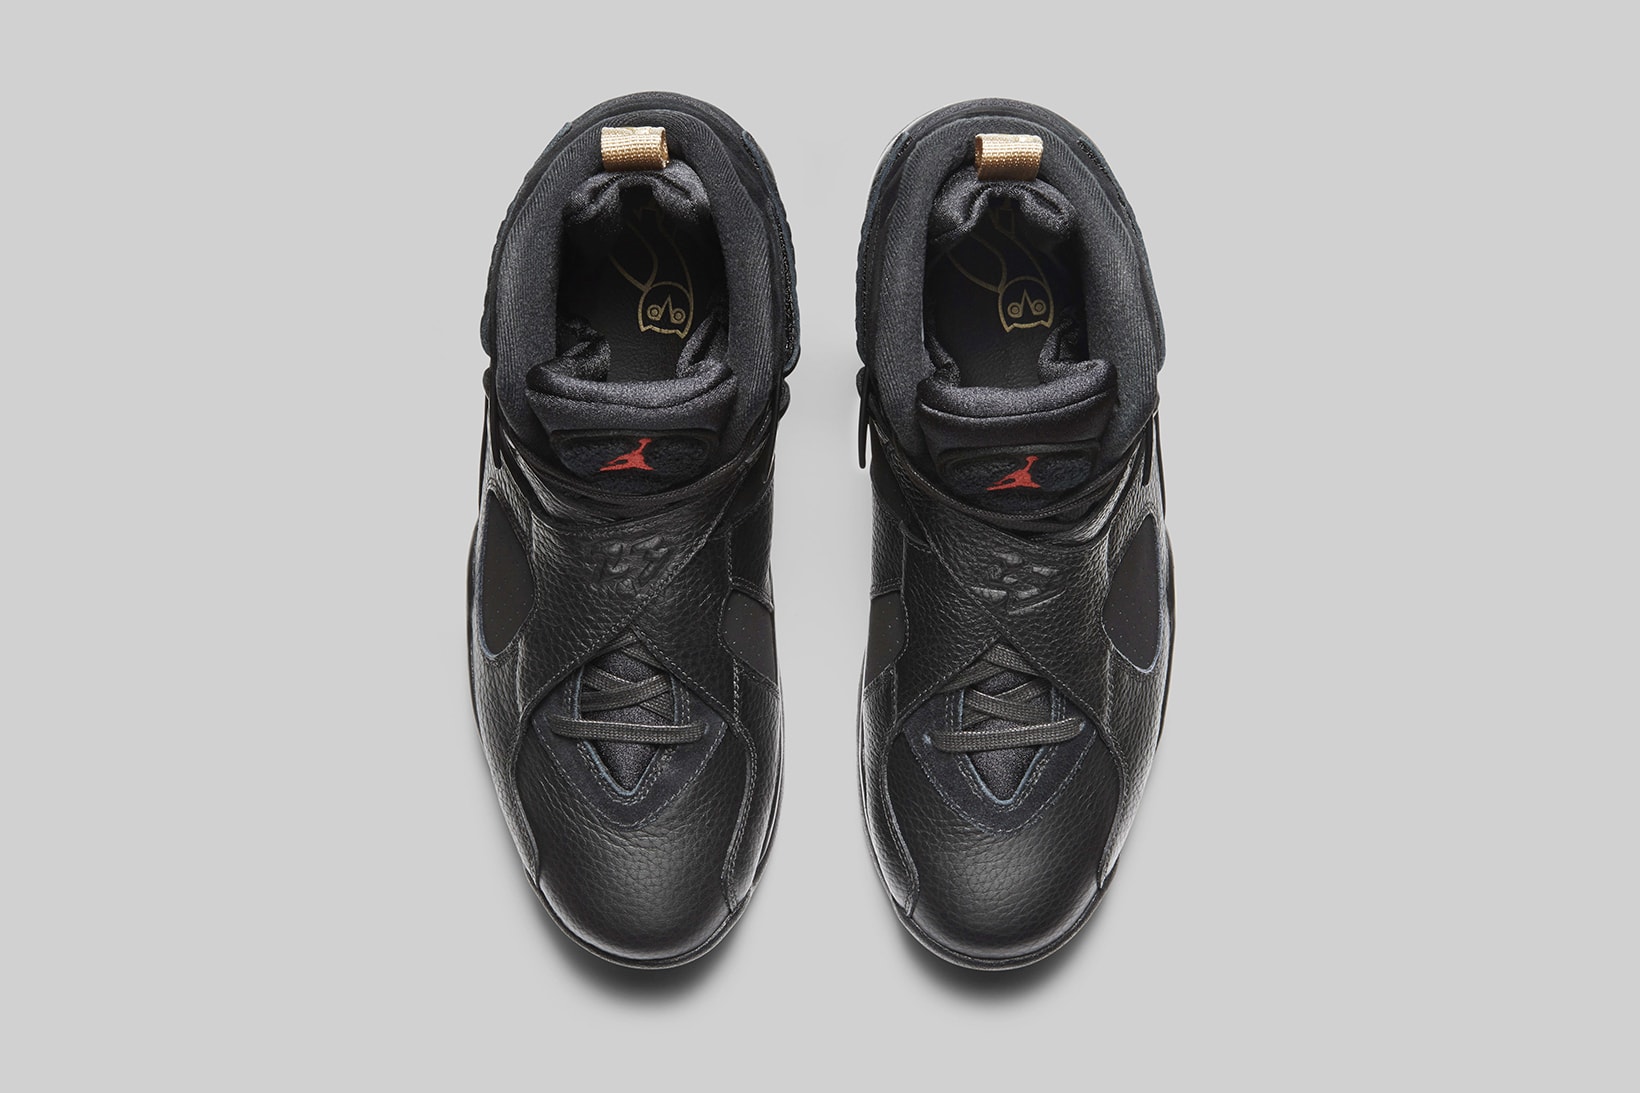 Drake OVO Air Jordan 8 Retro Black and White Sneakers Mens Shoes release info date drops February 16 2018